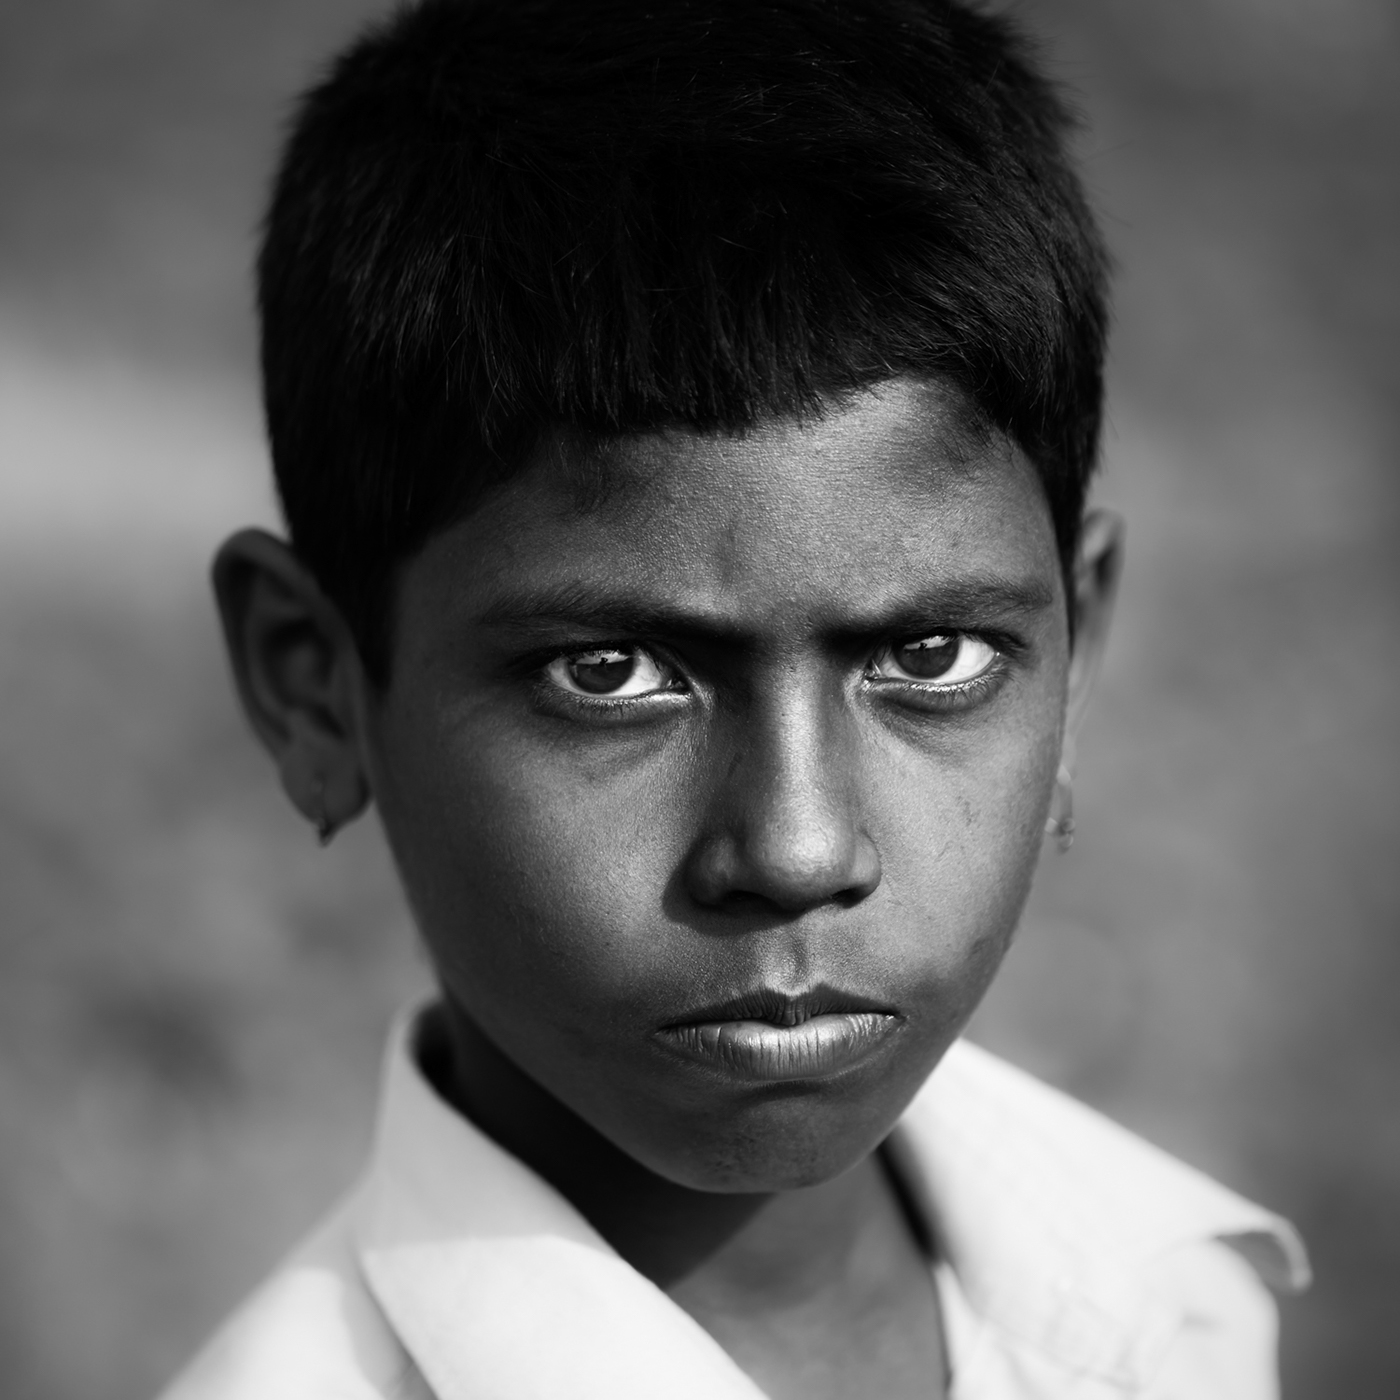 portraits kids India eyes closeup